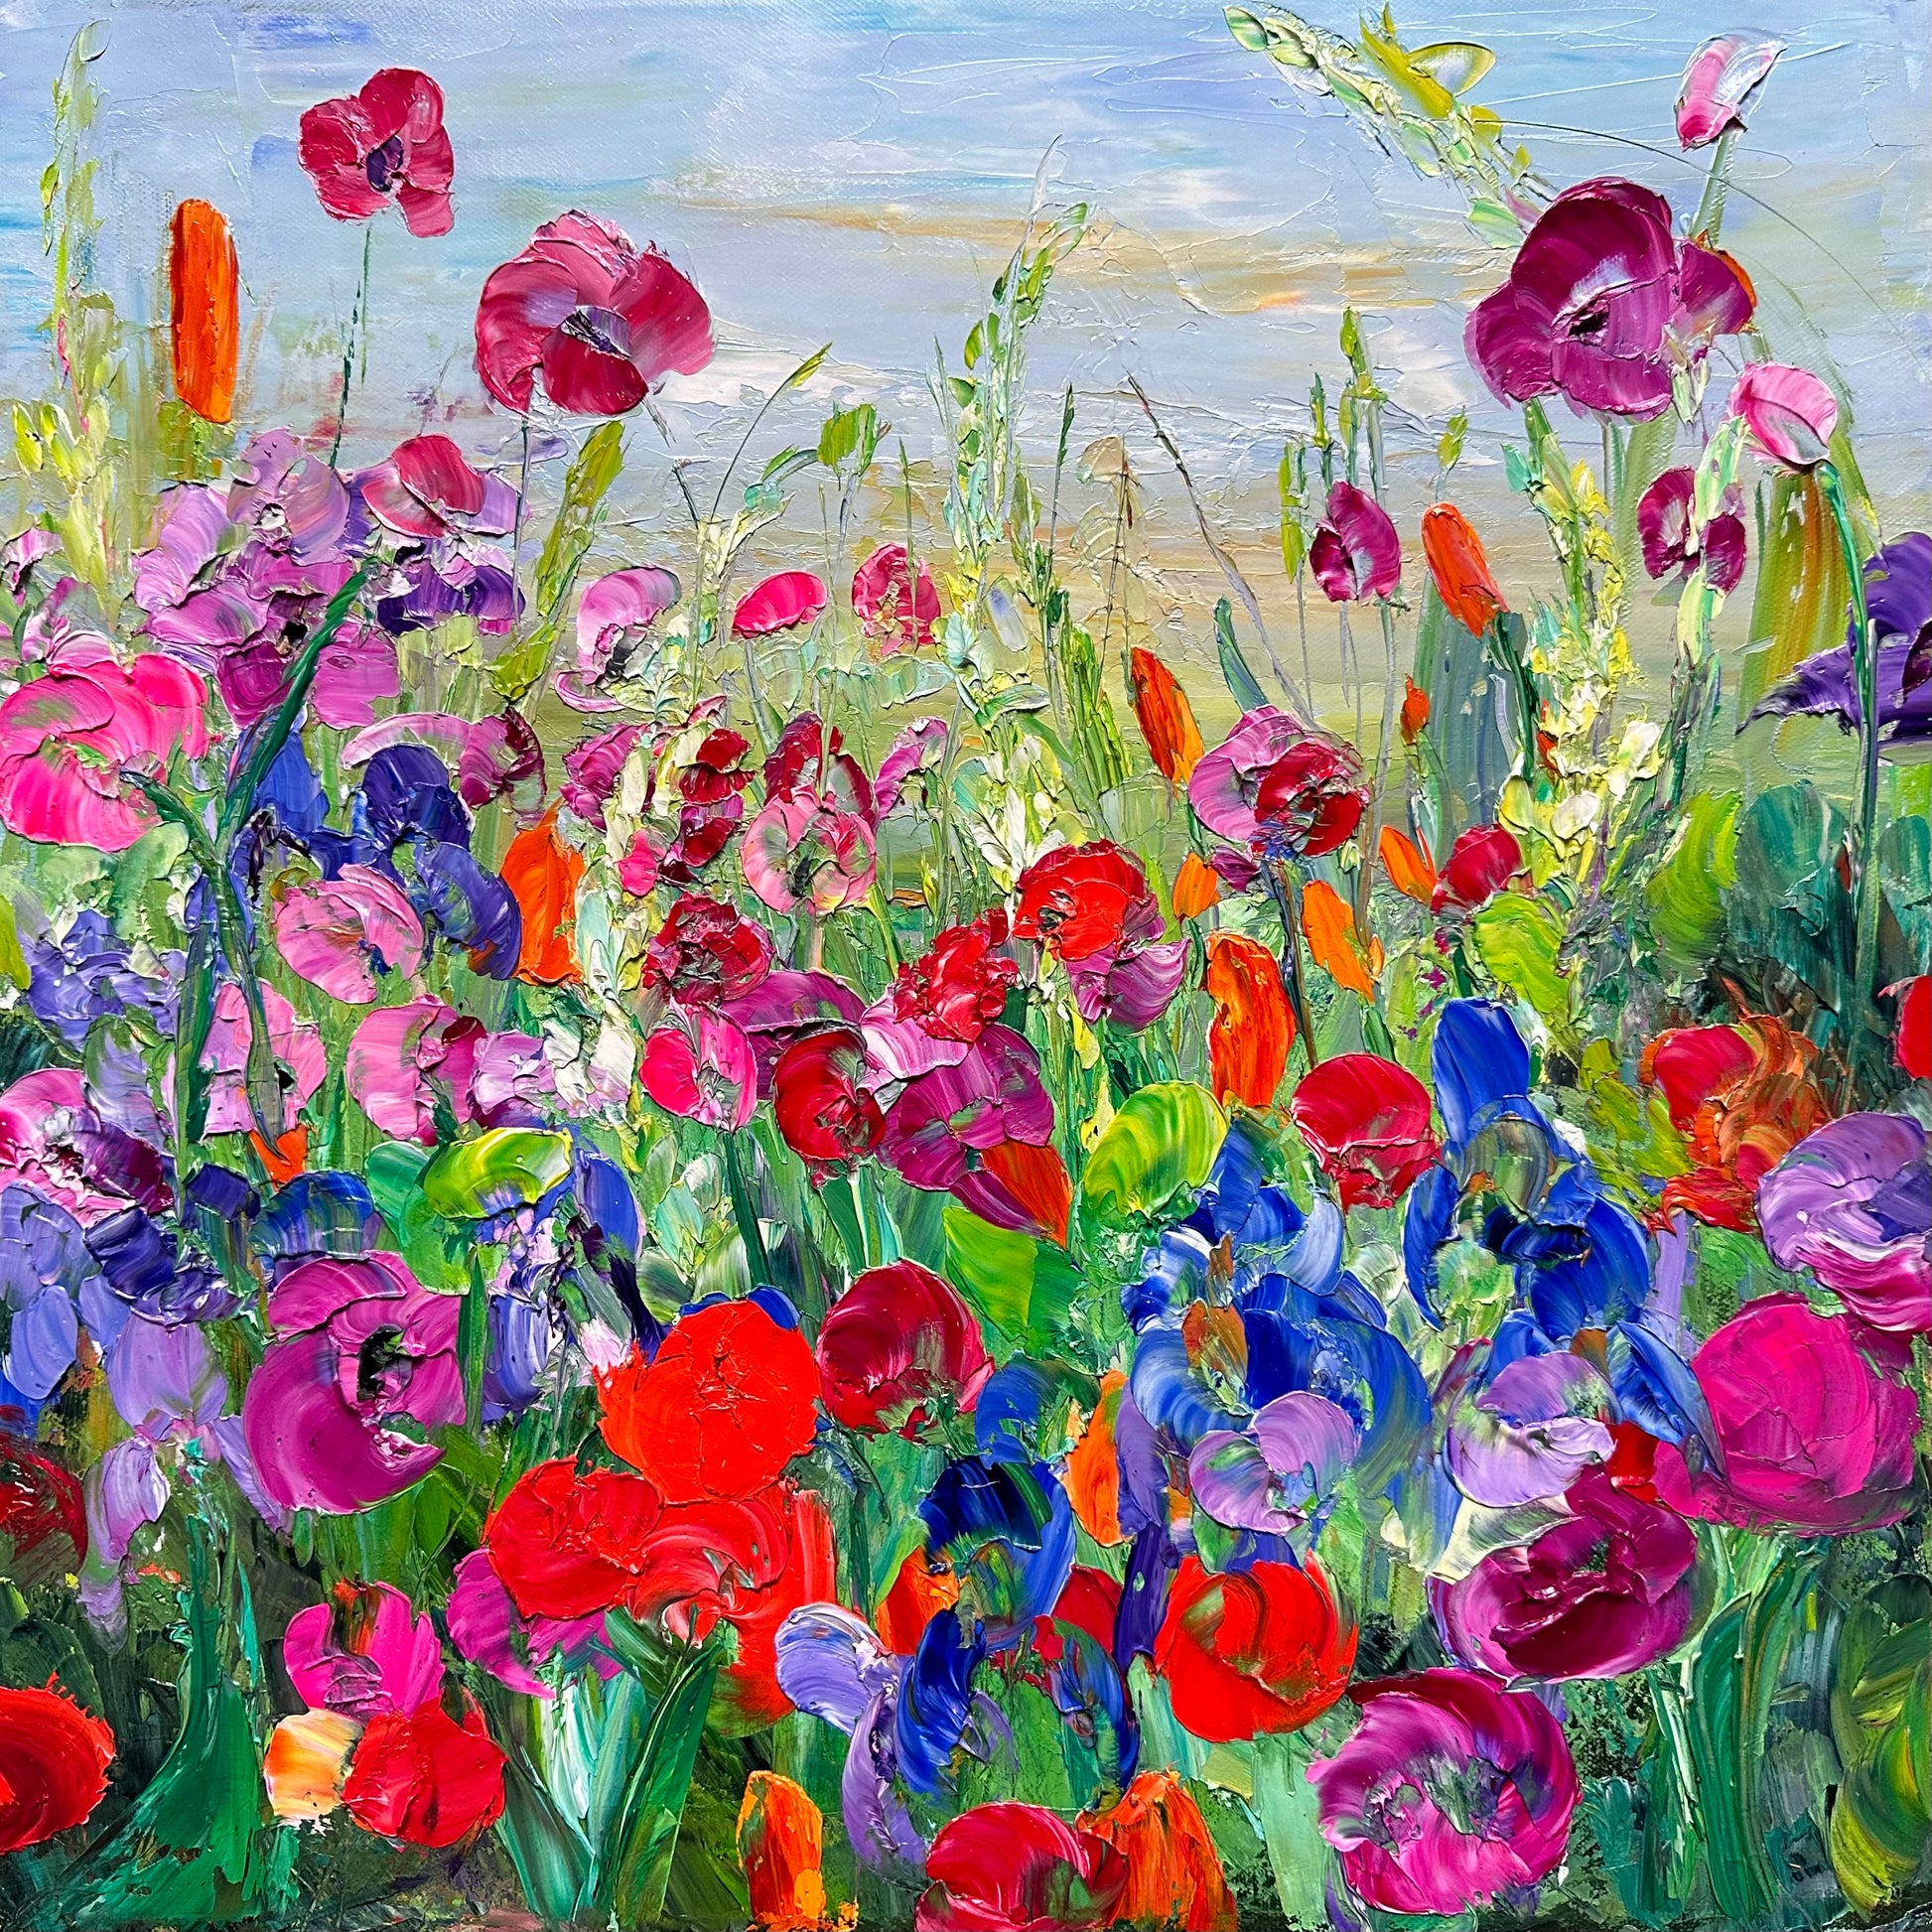 Flower field painting.